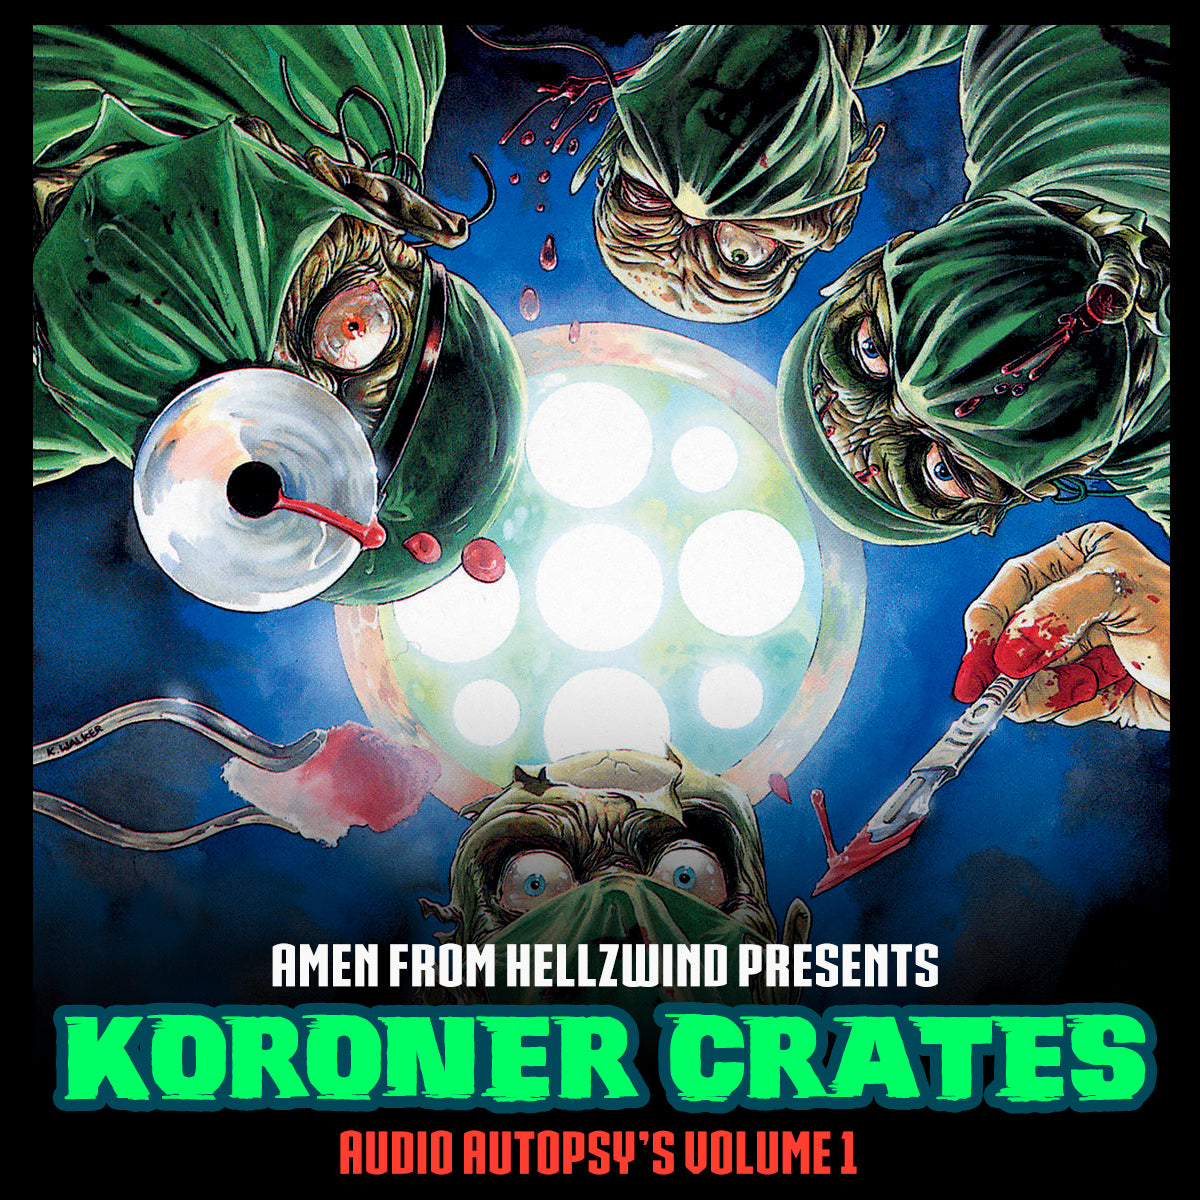 The Koroner Krates Vol 1